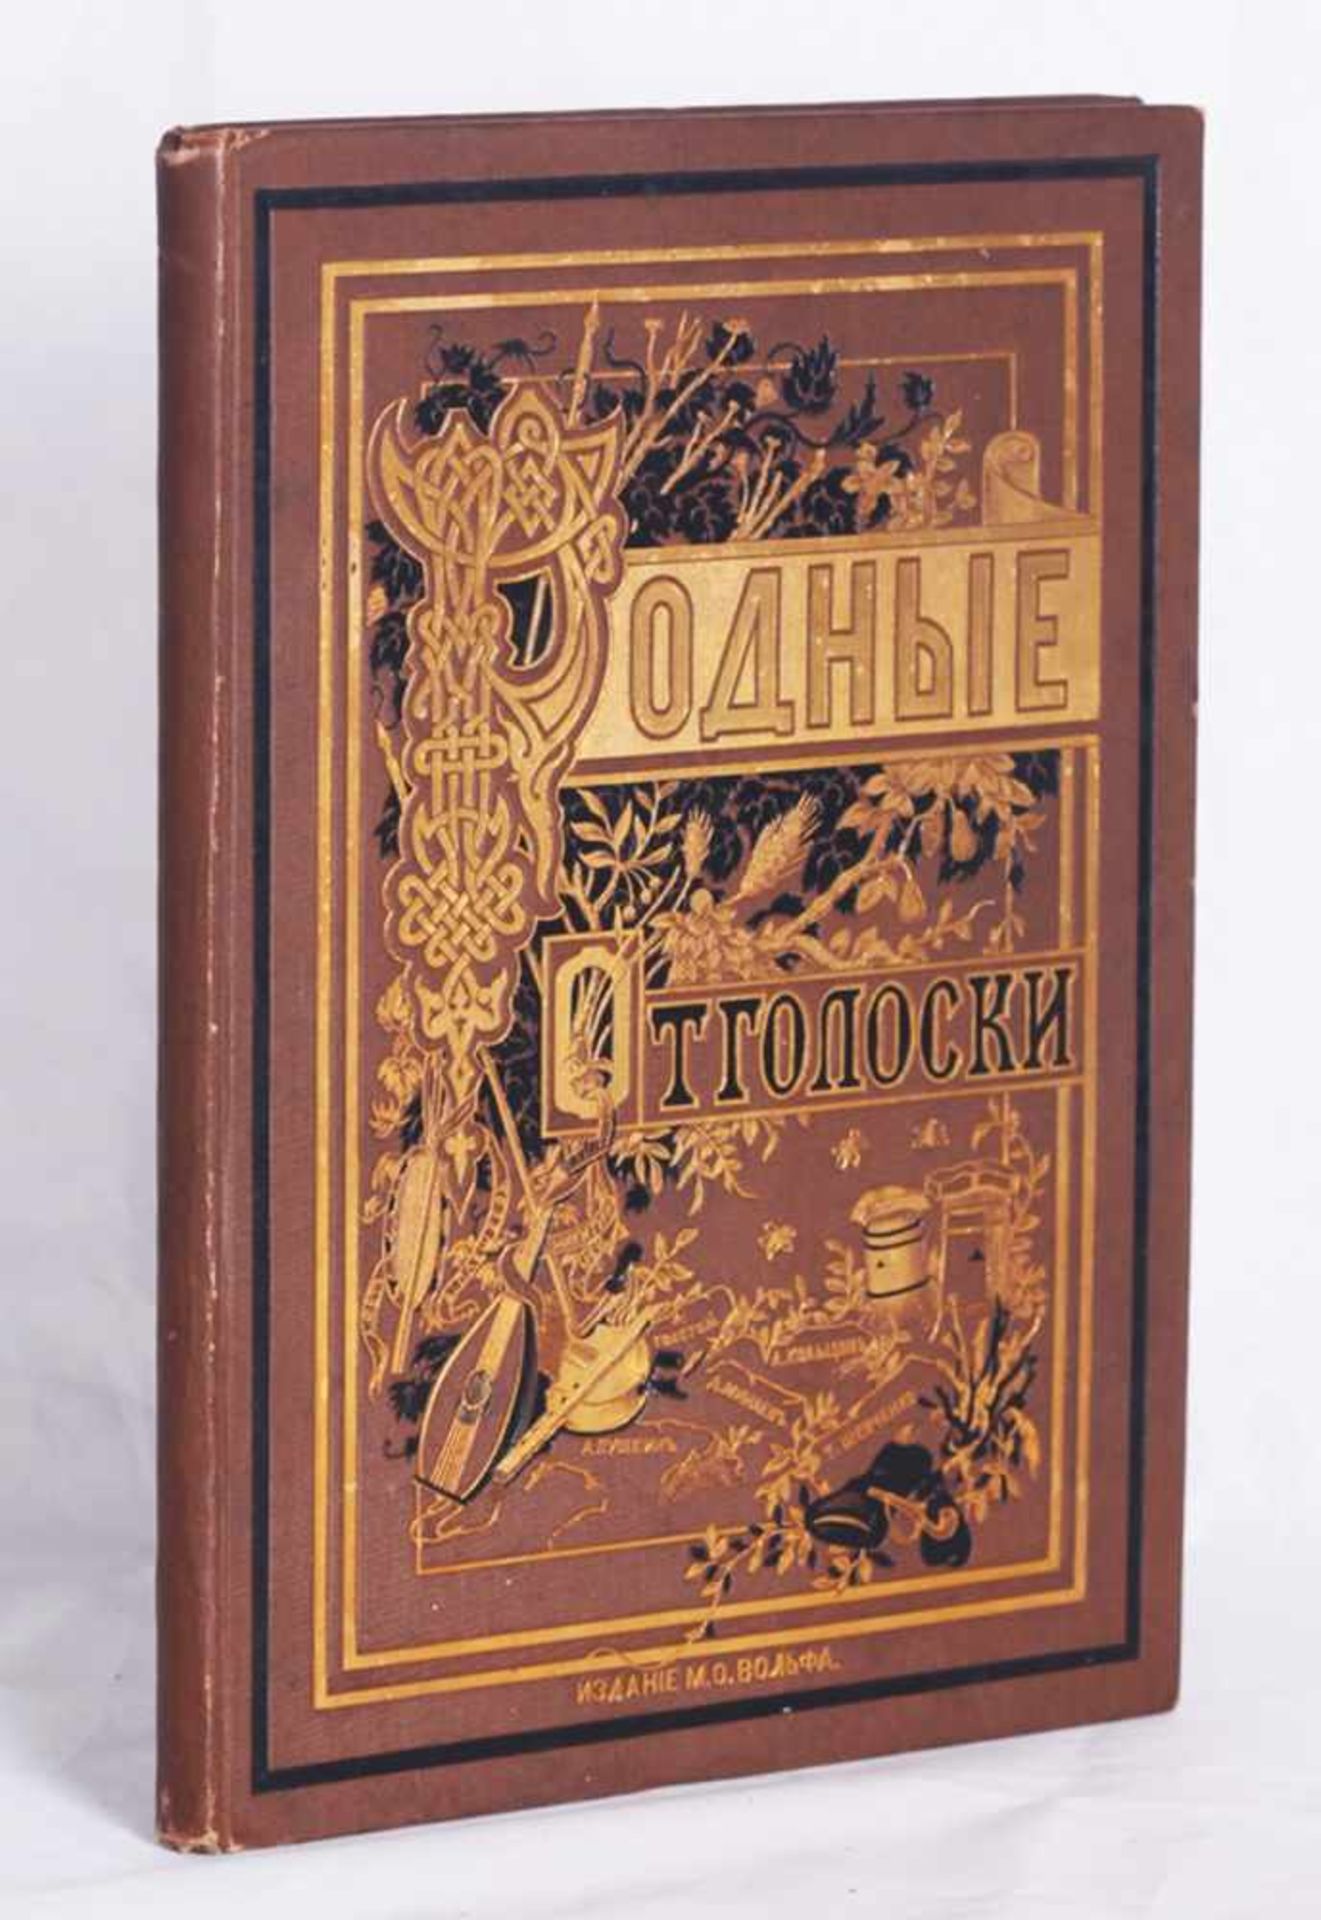 Polevoy, Pyotr. Native echoes. - Saint Petersburg: M. Wolff, 1881. - 102 pp., 28,6x21 cm.Original